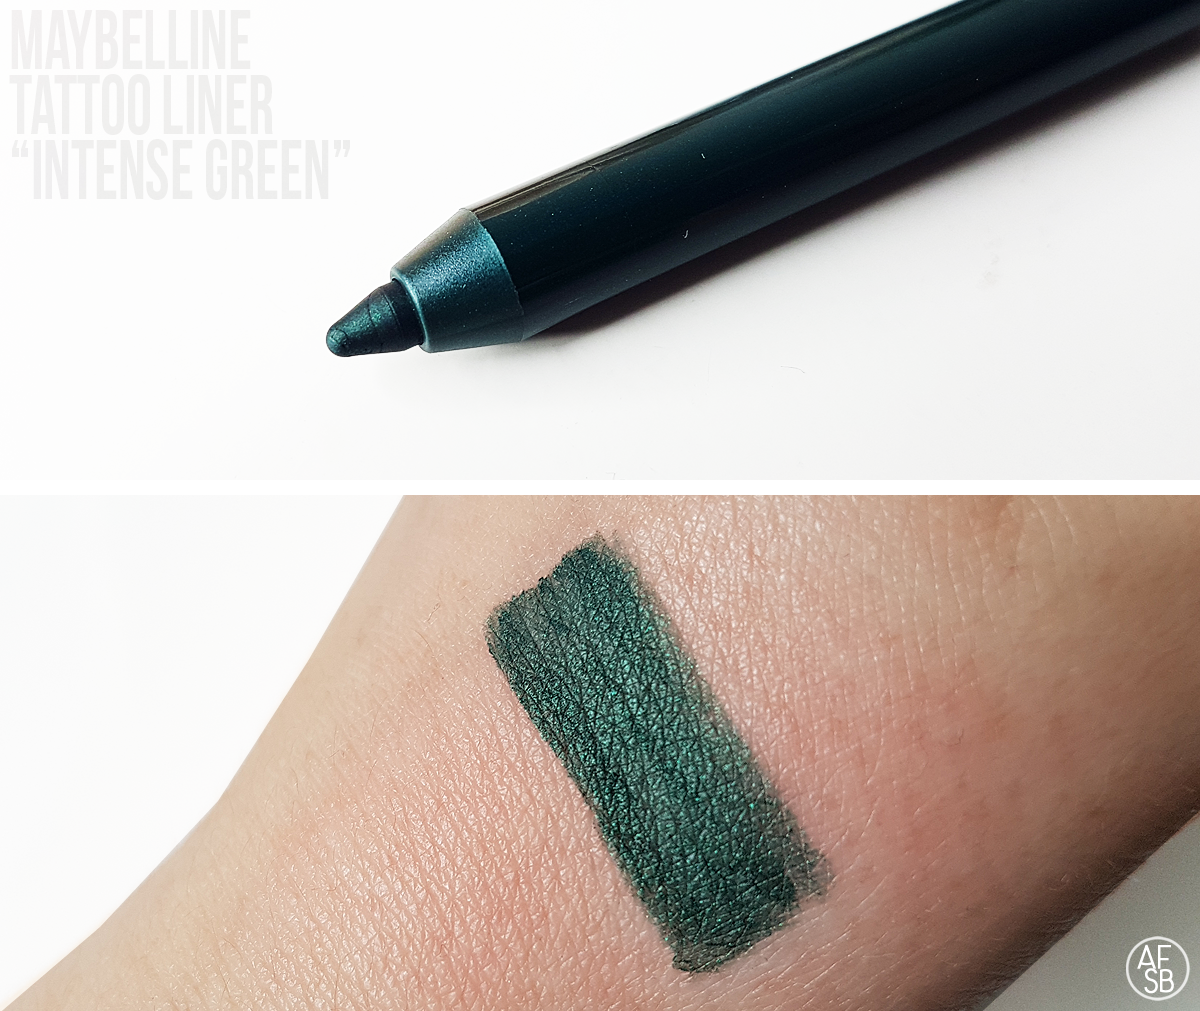 Tattoo Liner de Maybelline in Intense Green #eyepencil #eyemakeup